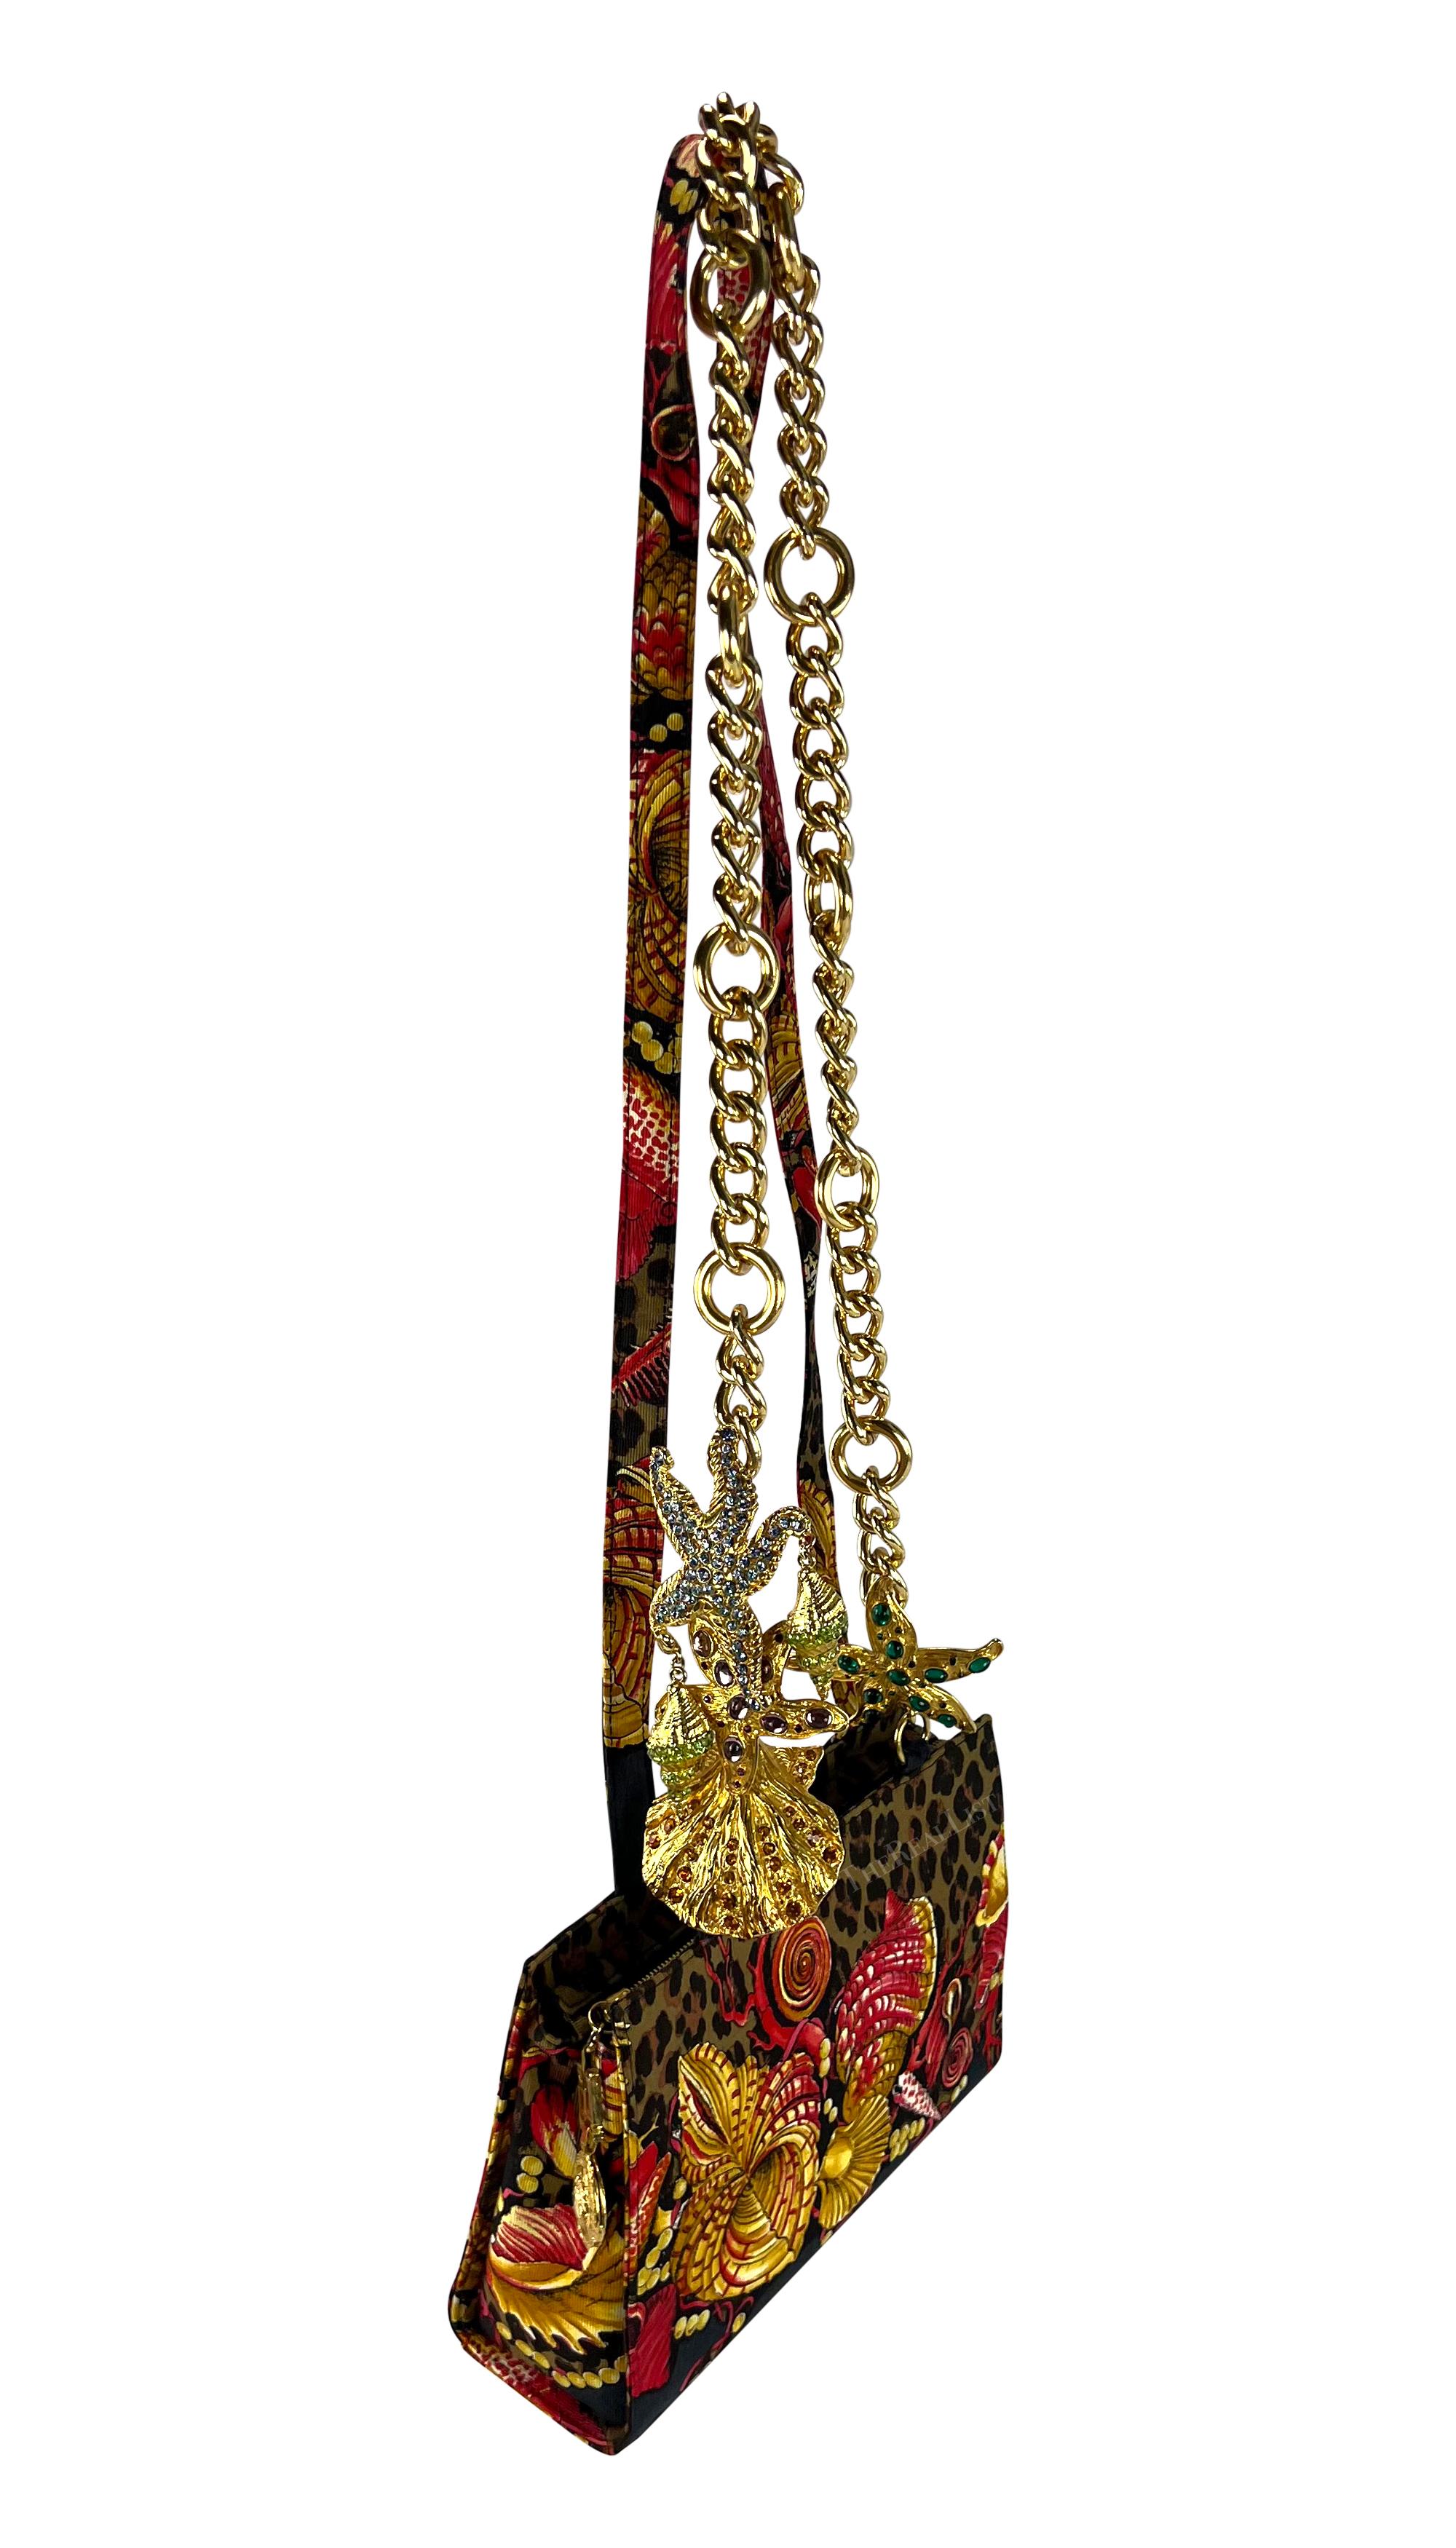 S/S 1992 Gianni Versace Runway Rhinestone Gold Shell Jewel Chain Crossbody Bag  For Sale 11